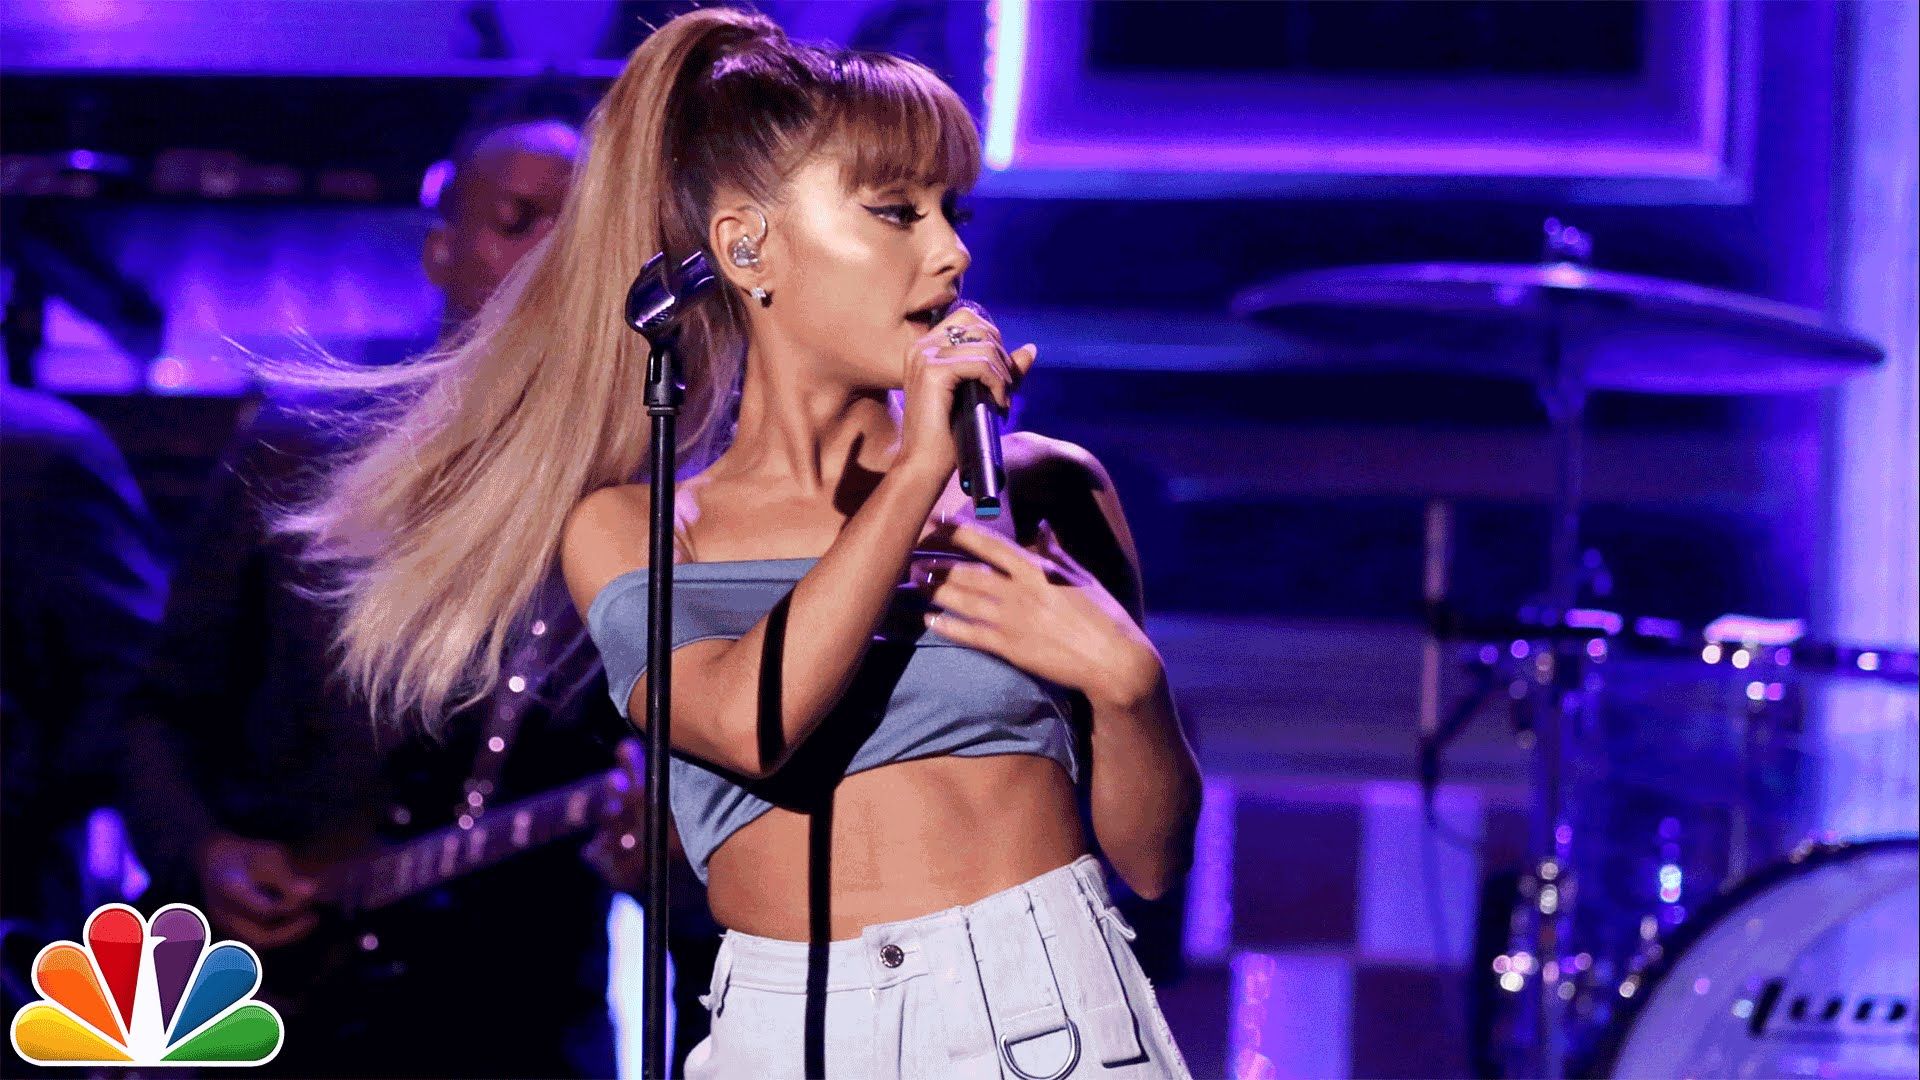 Ariana Grande Rapped Nicki Minaj's Verse of “Side to Side”